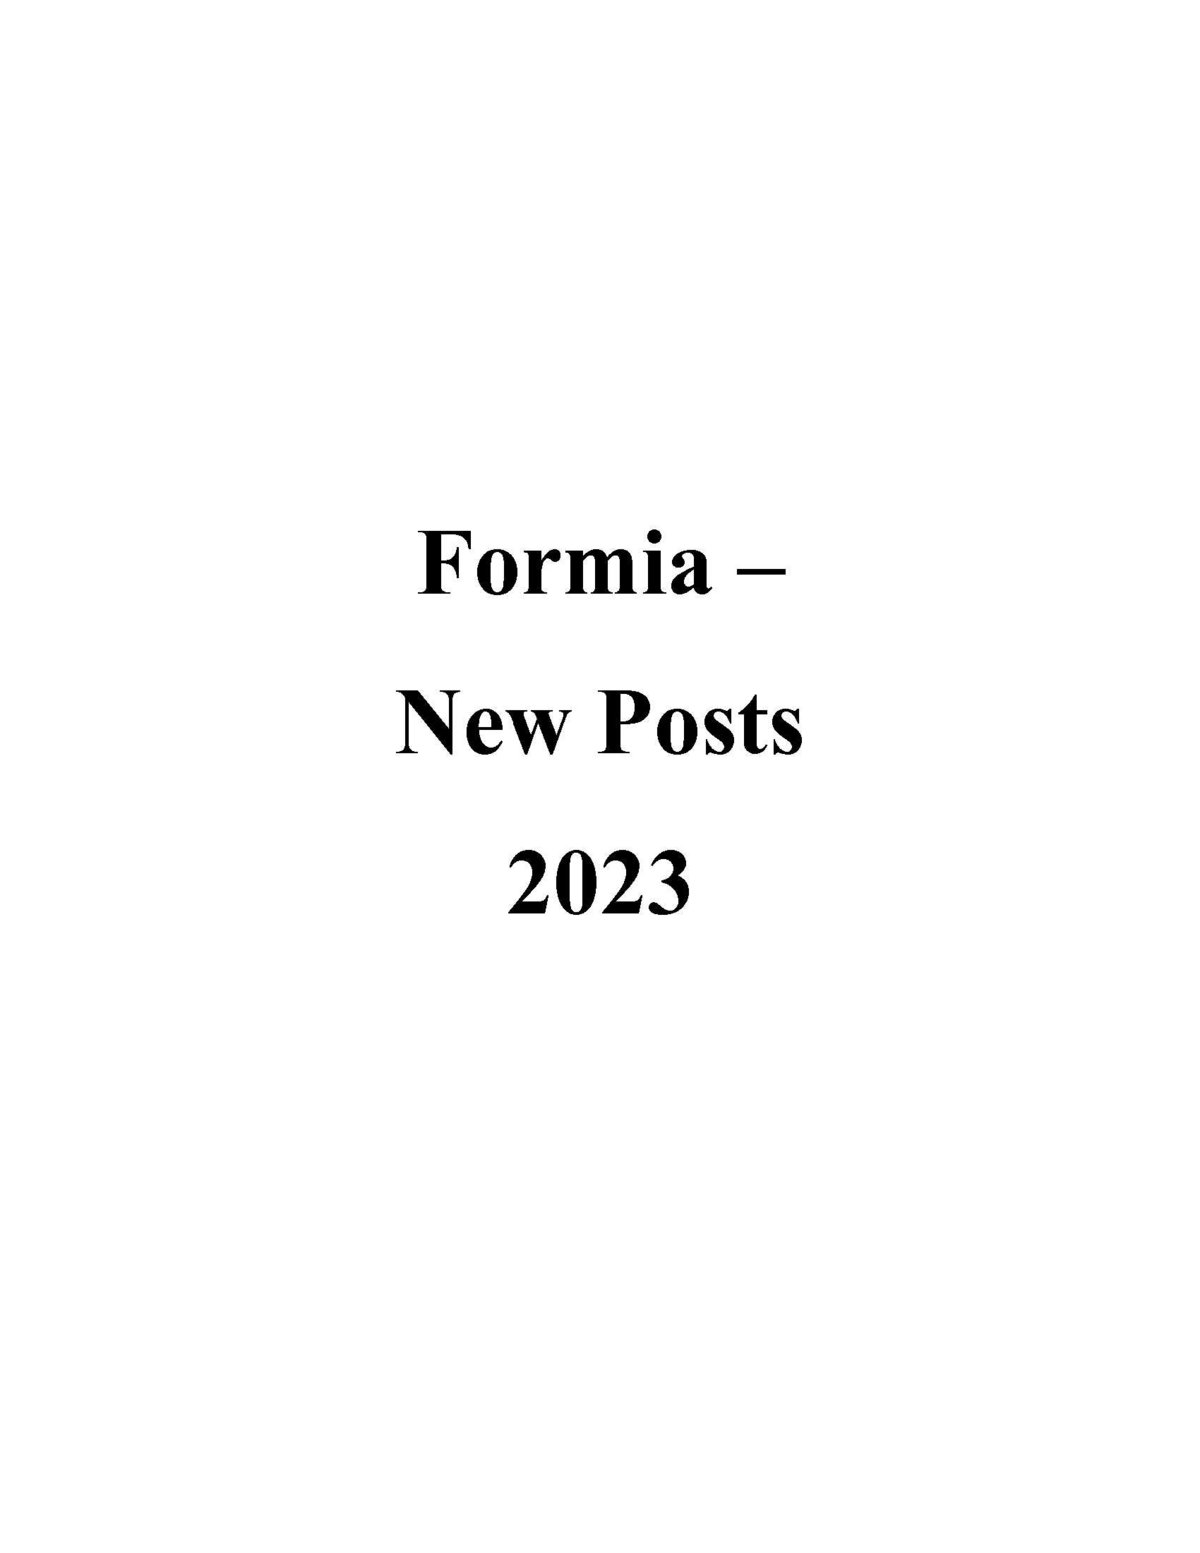 Formia 2023